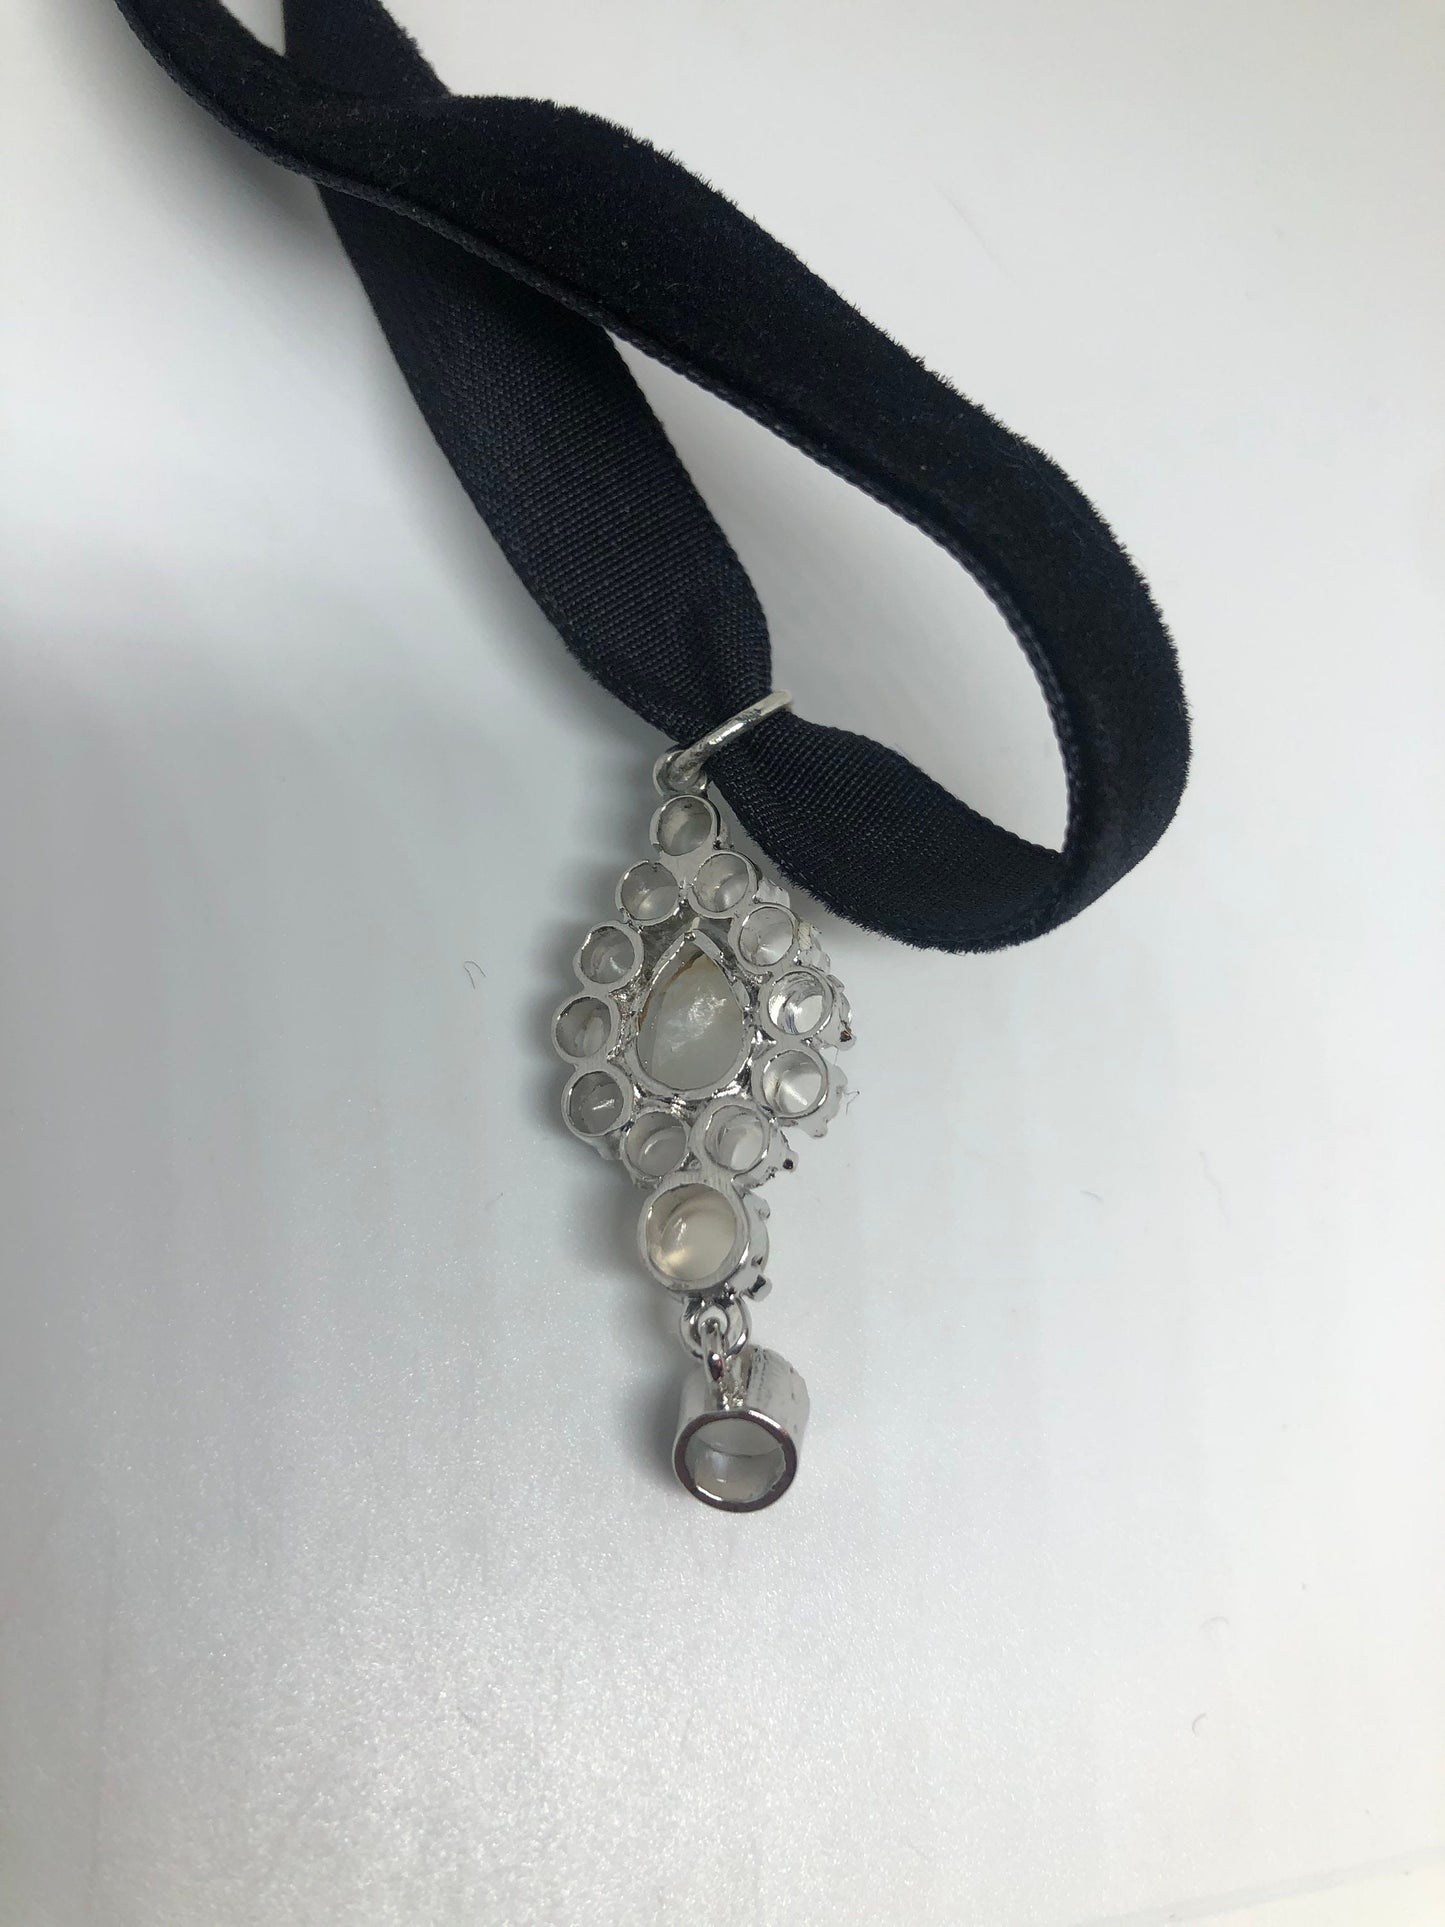 Vintage 925 Sterling Silver Rainbow Moonstone Pendant Necklace Choker